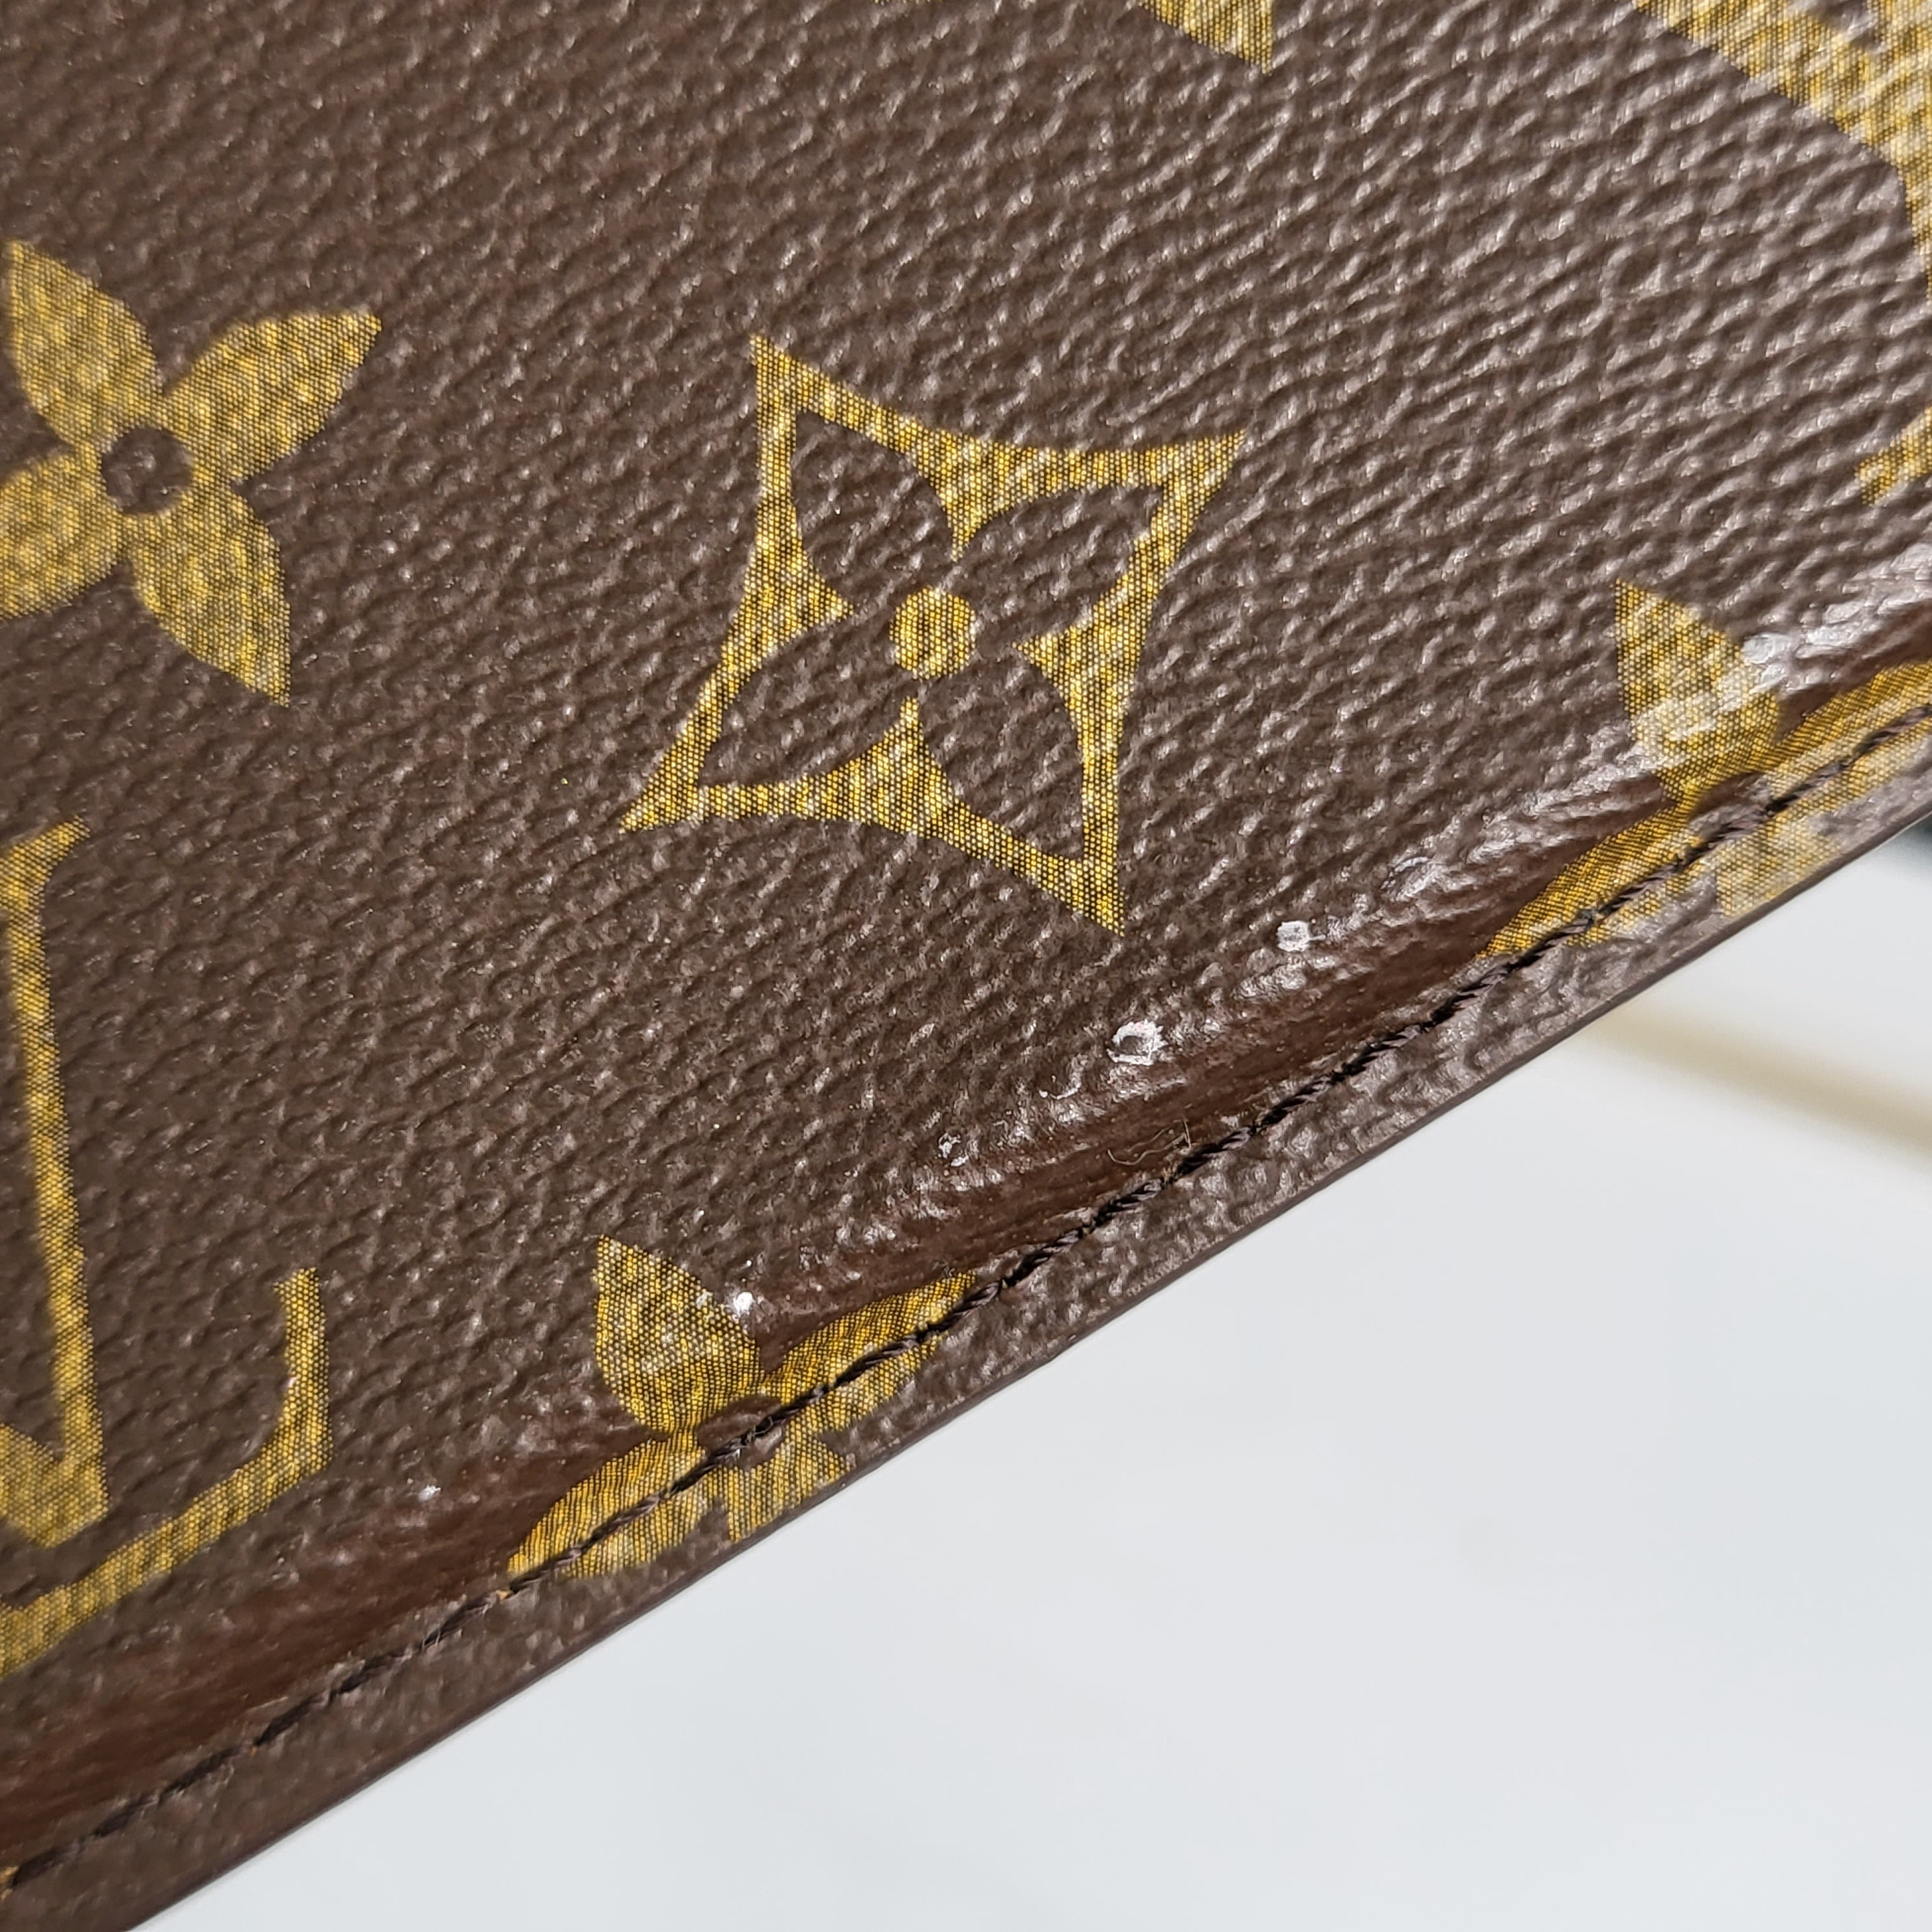 Louis Vuitton Monogram Ipad Mini Case – Marichelle's Empire